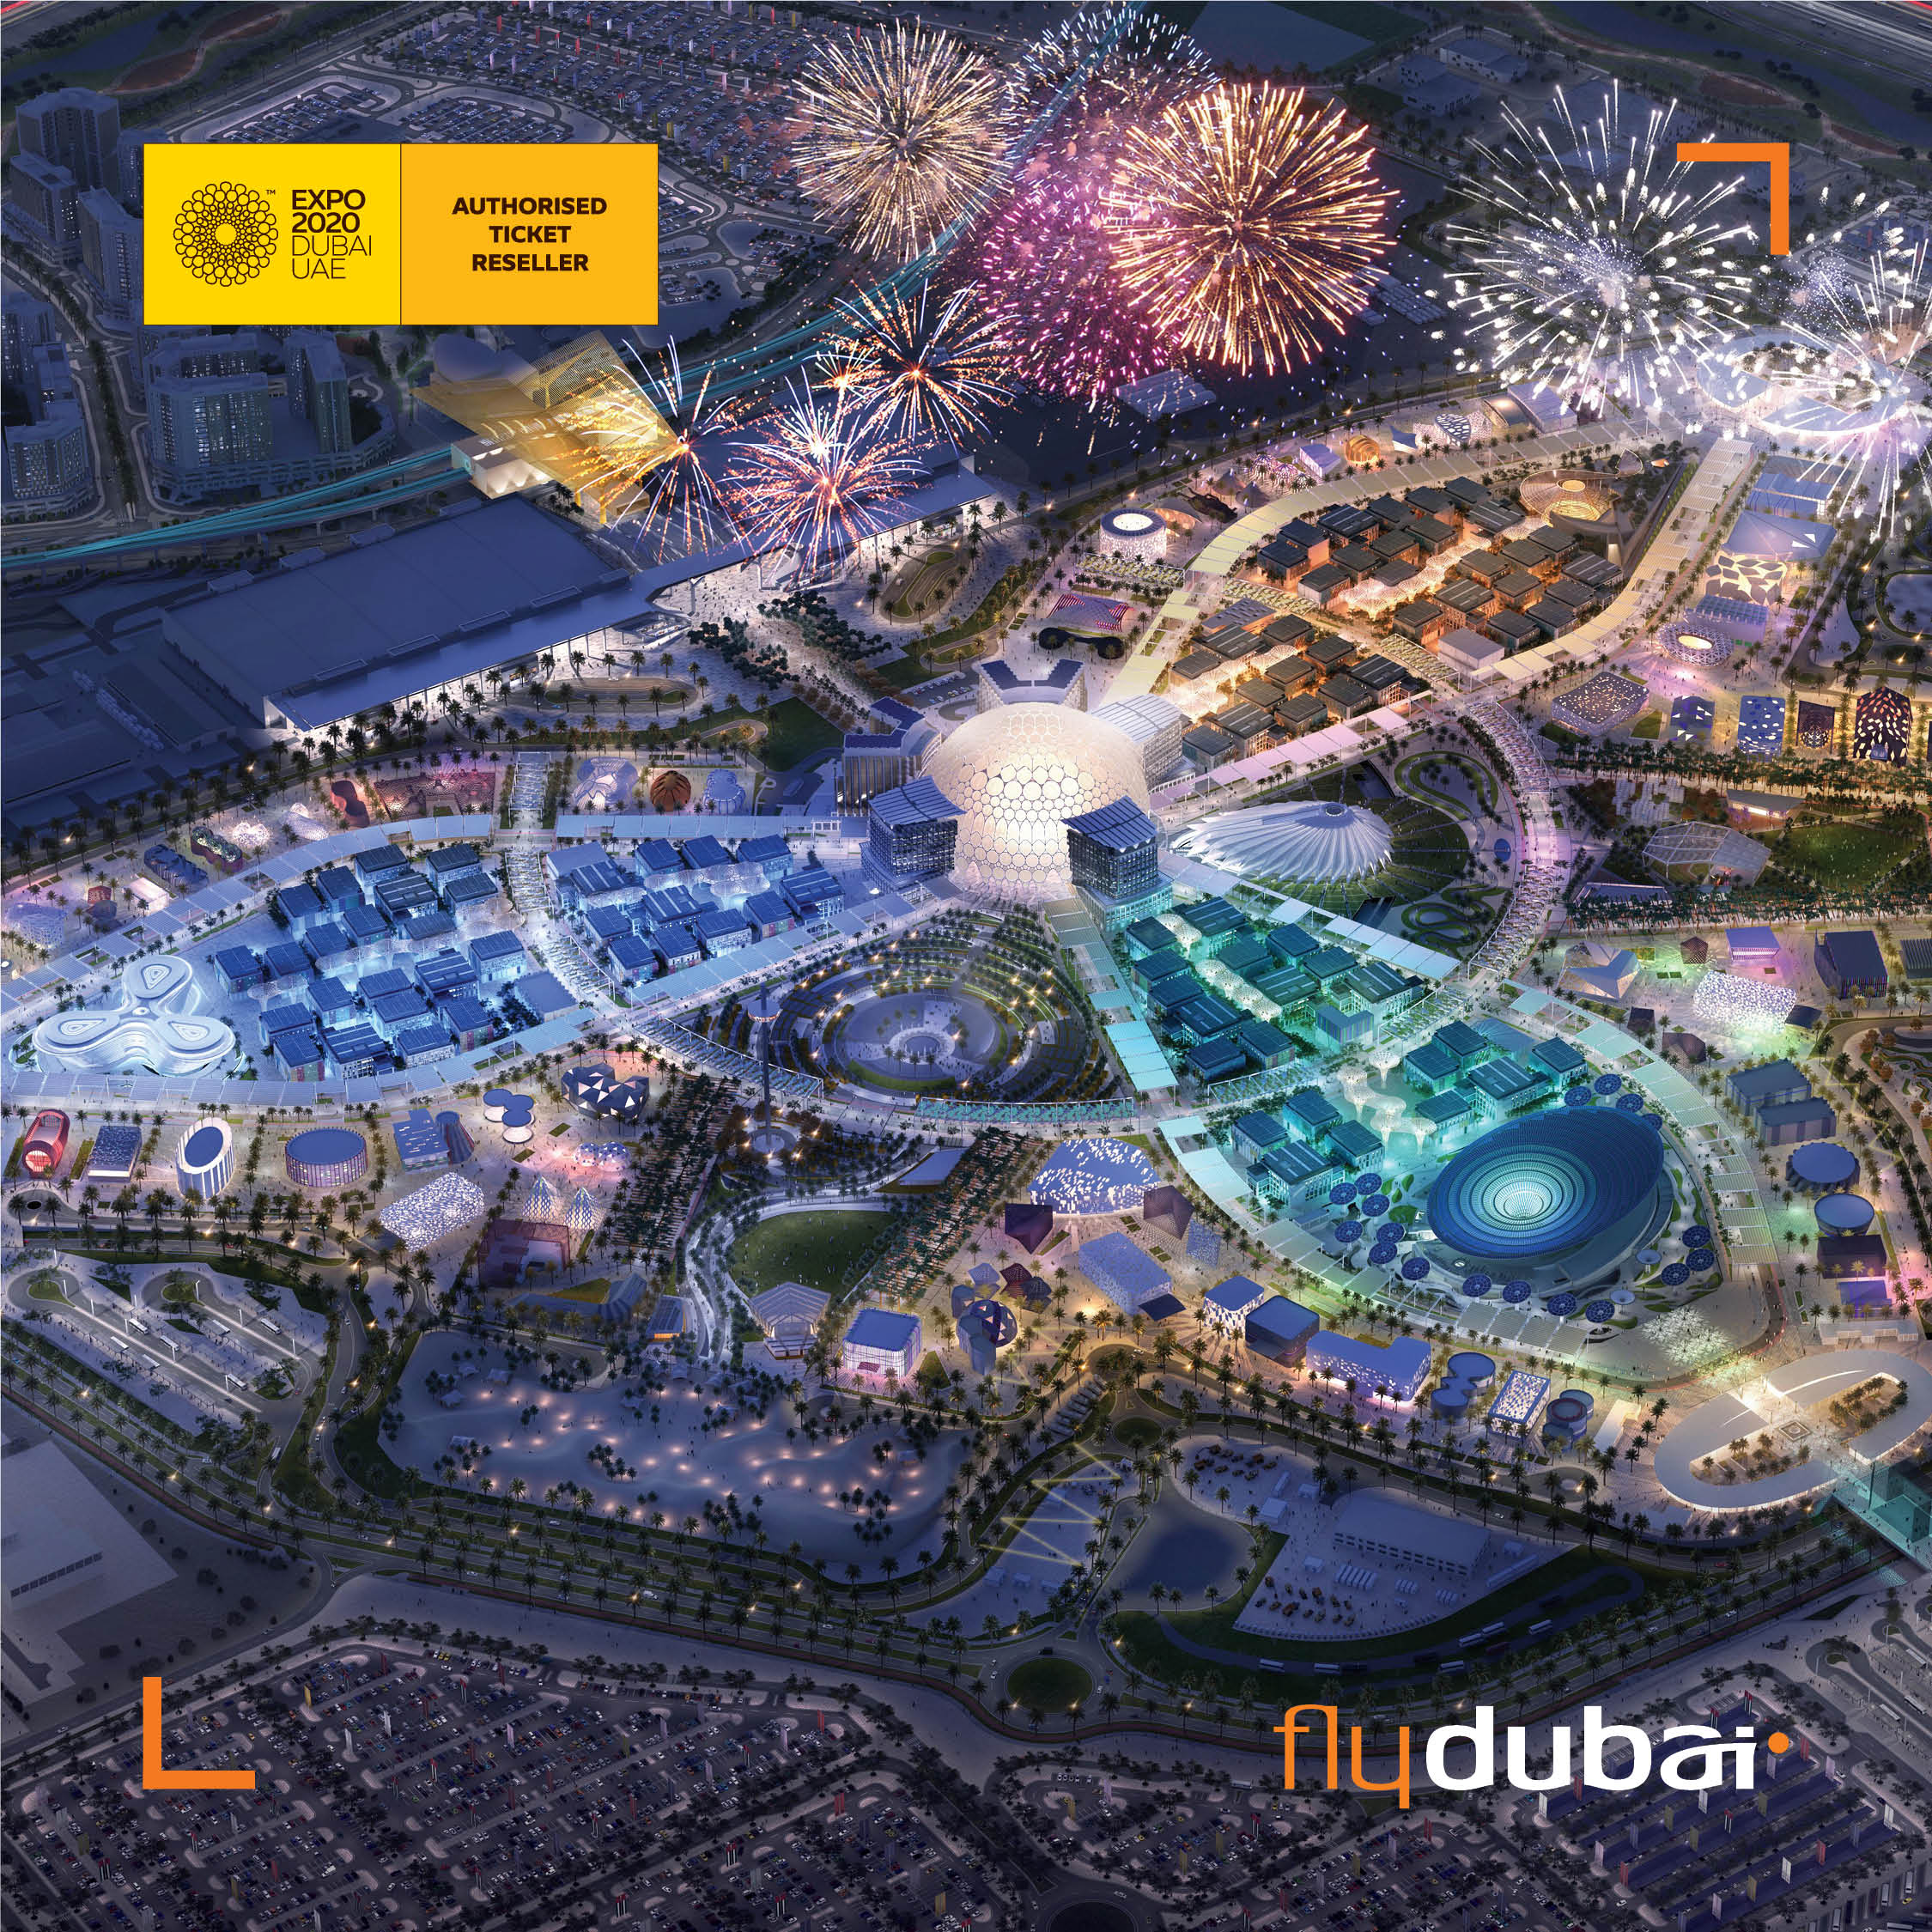 flydubai passengers to enjoy a complimentary 1-Day Ticket to Expo 2020 Dubai